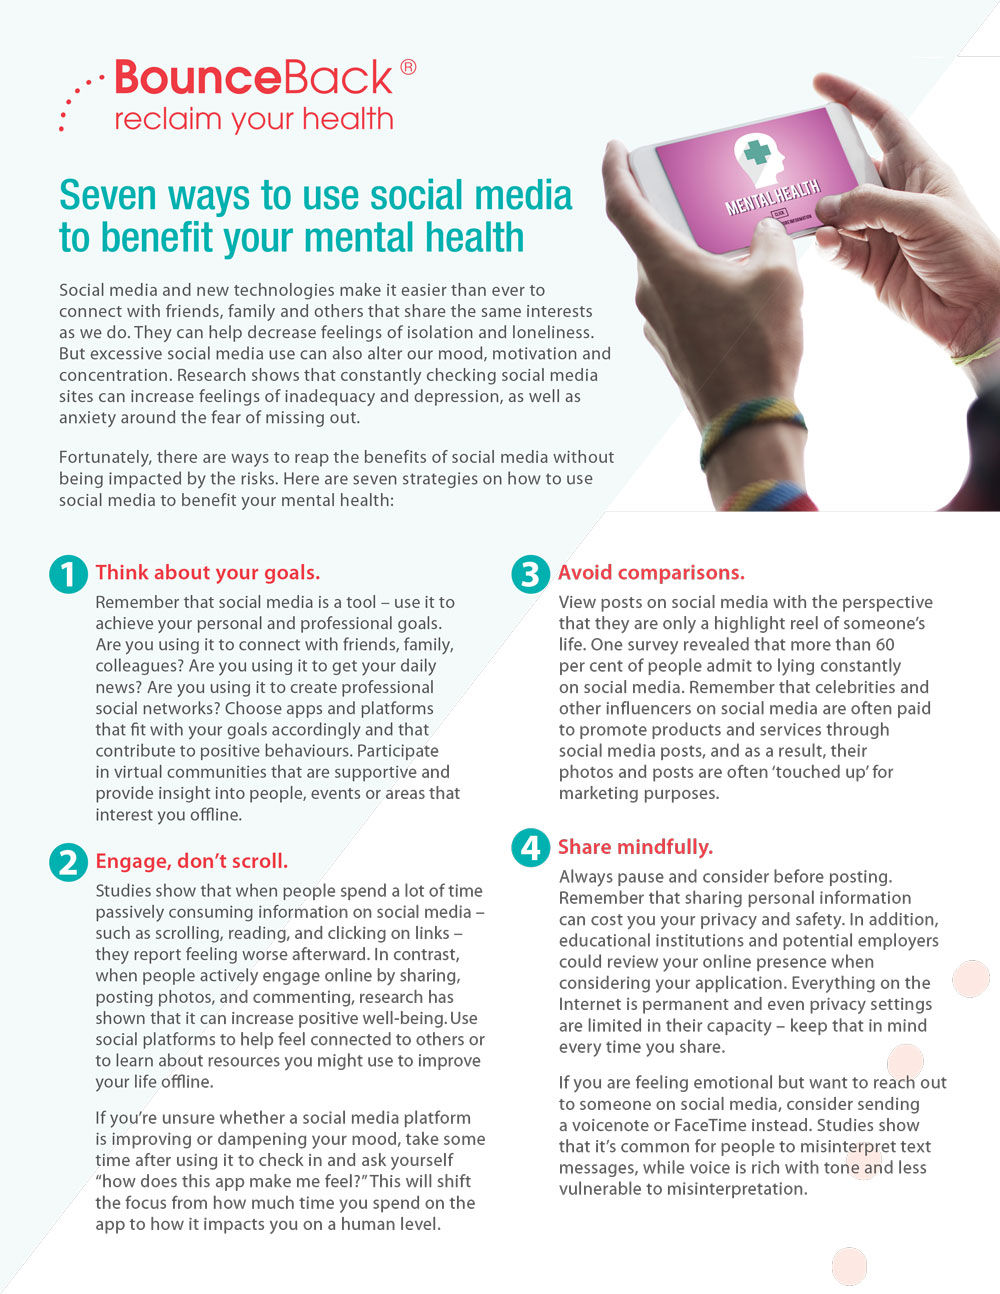 BounceBack Social-Media Mental Health Tip Sheet